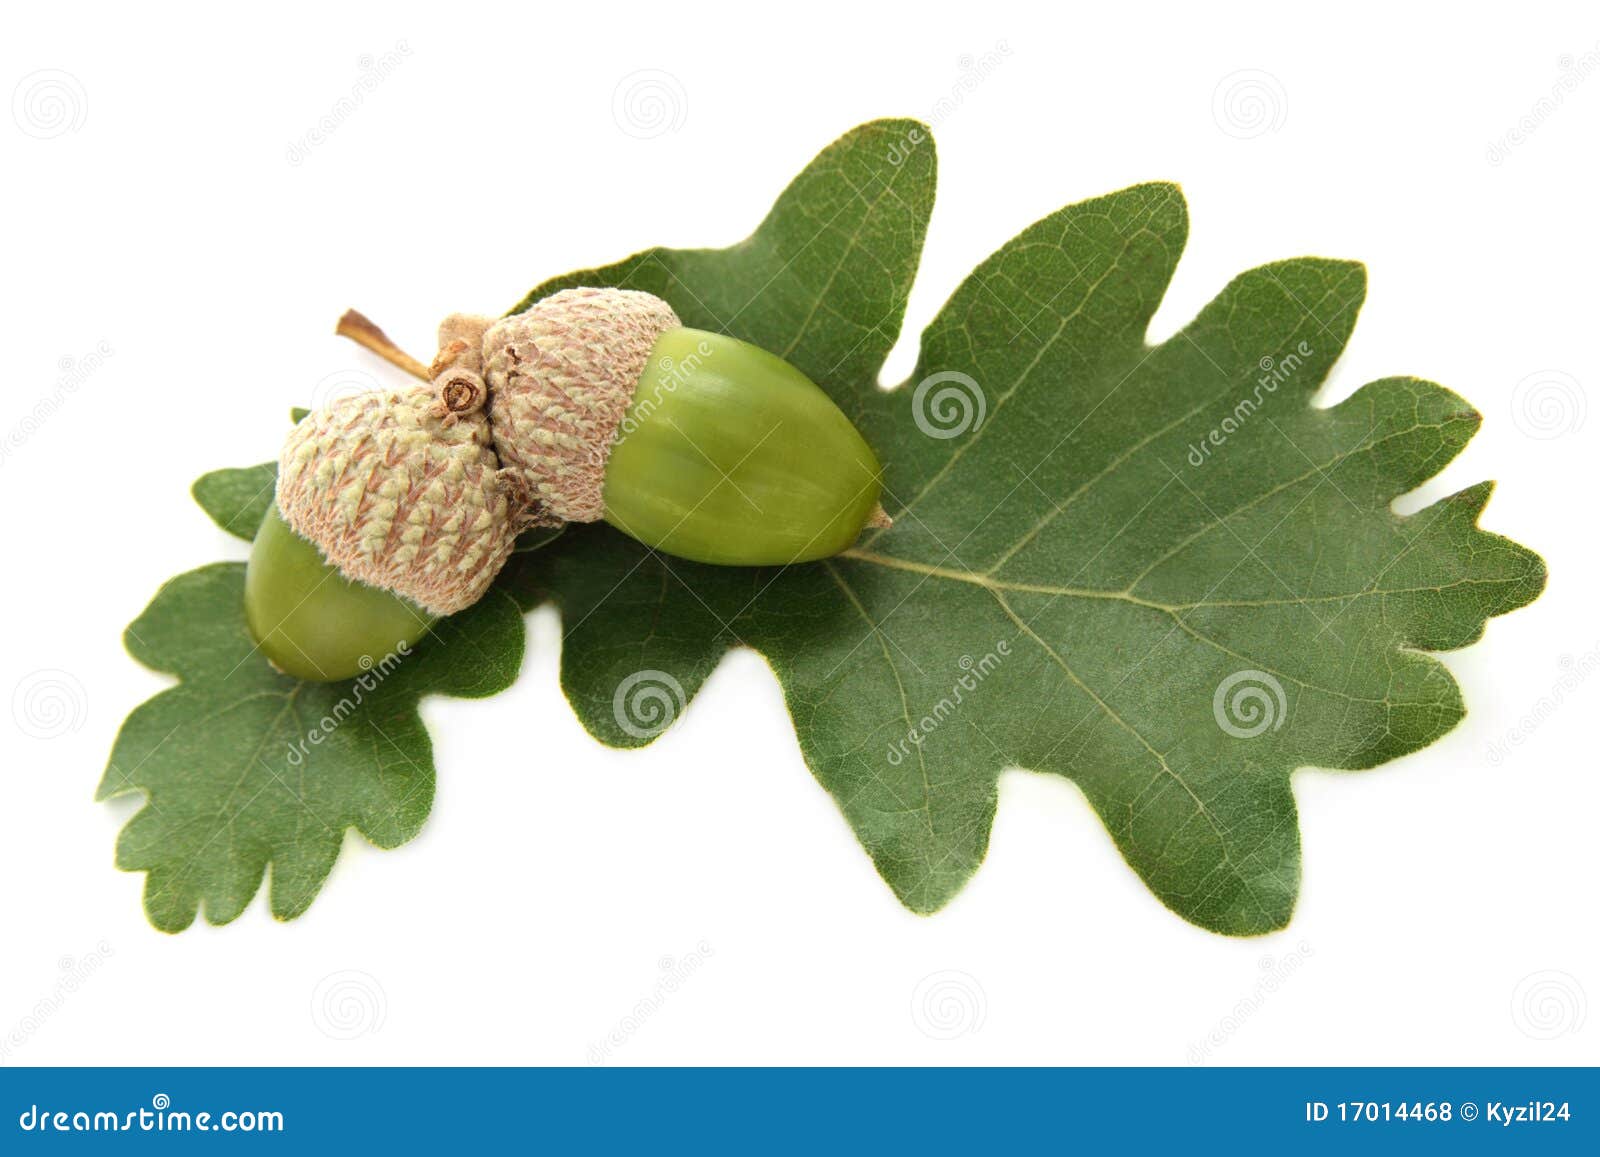 fresh green acorns with leaves